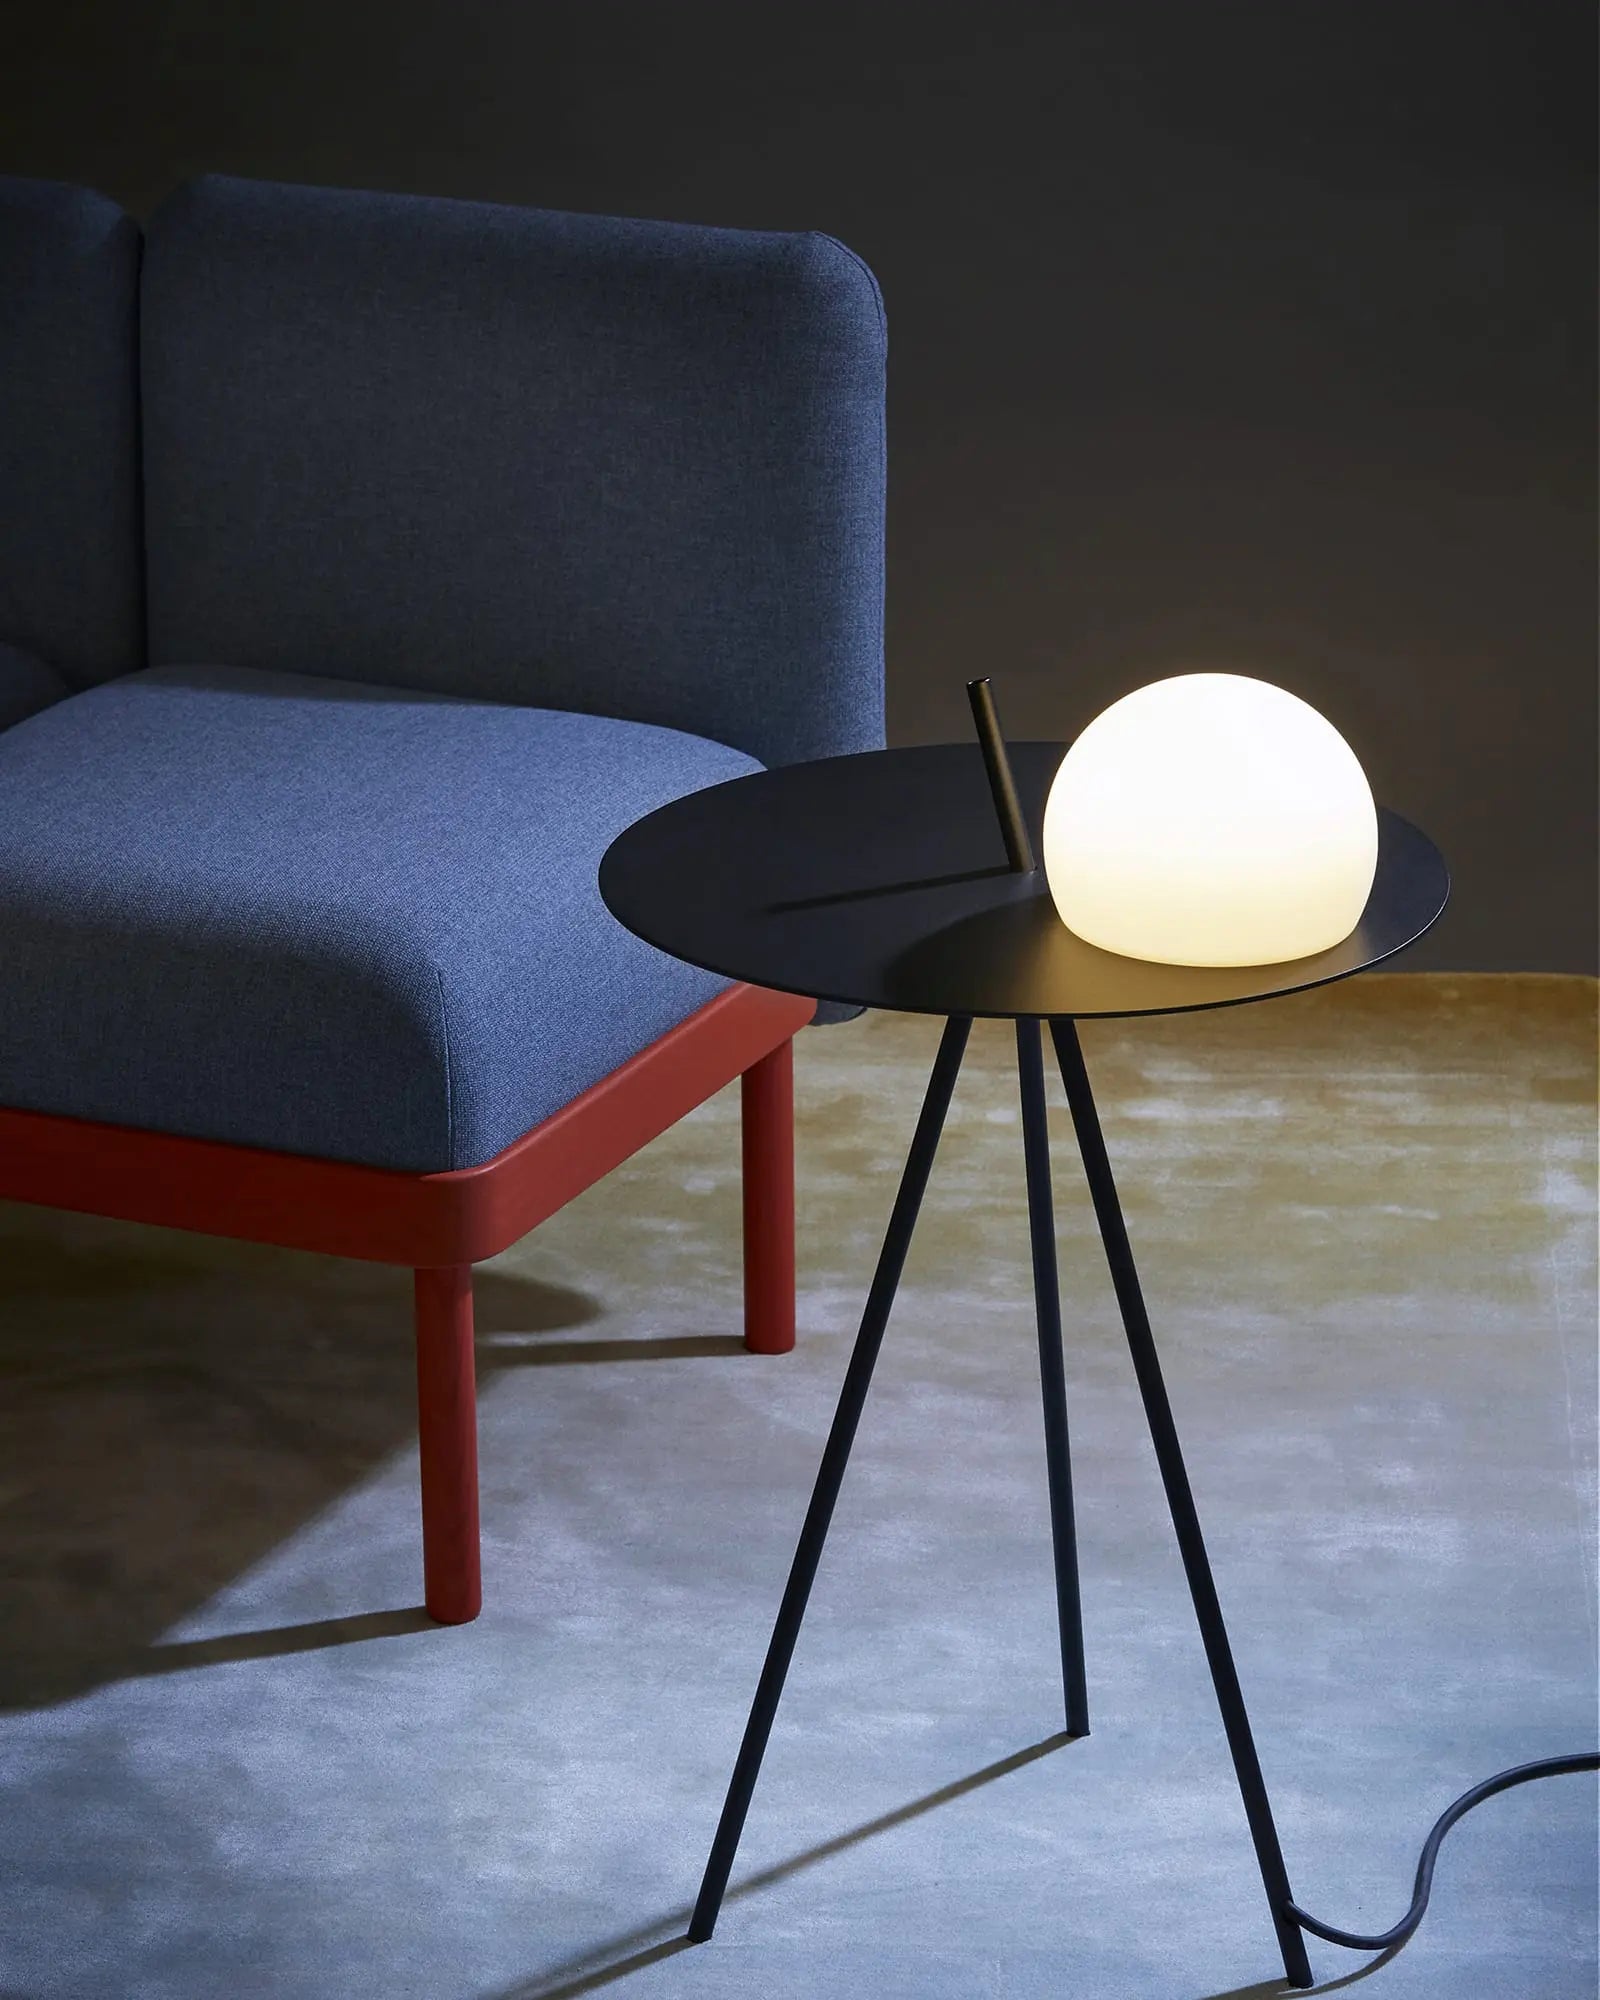 Circ table lamp